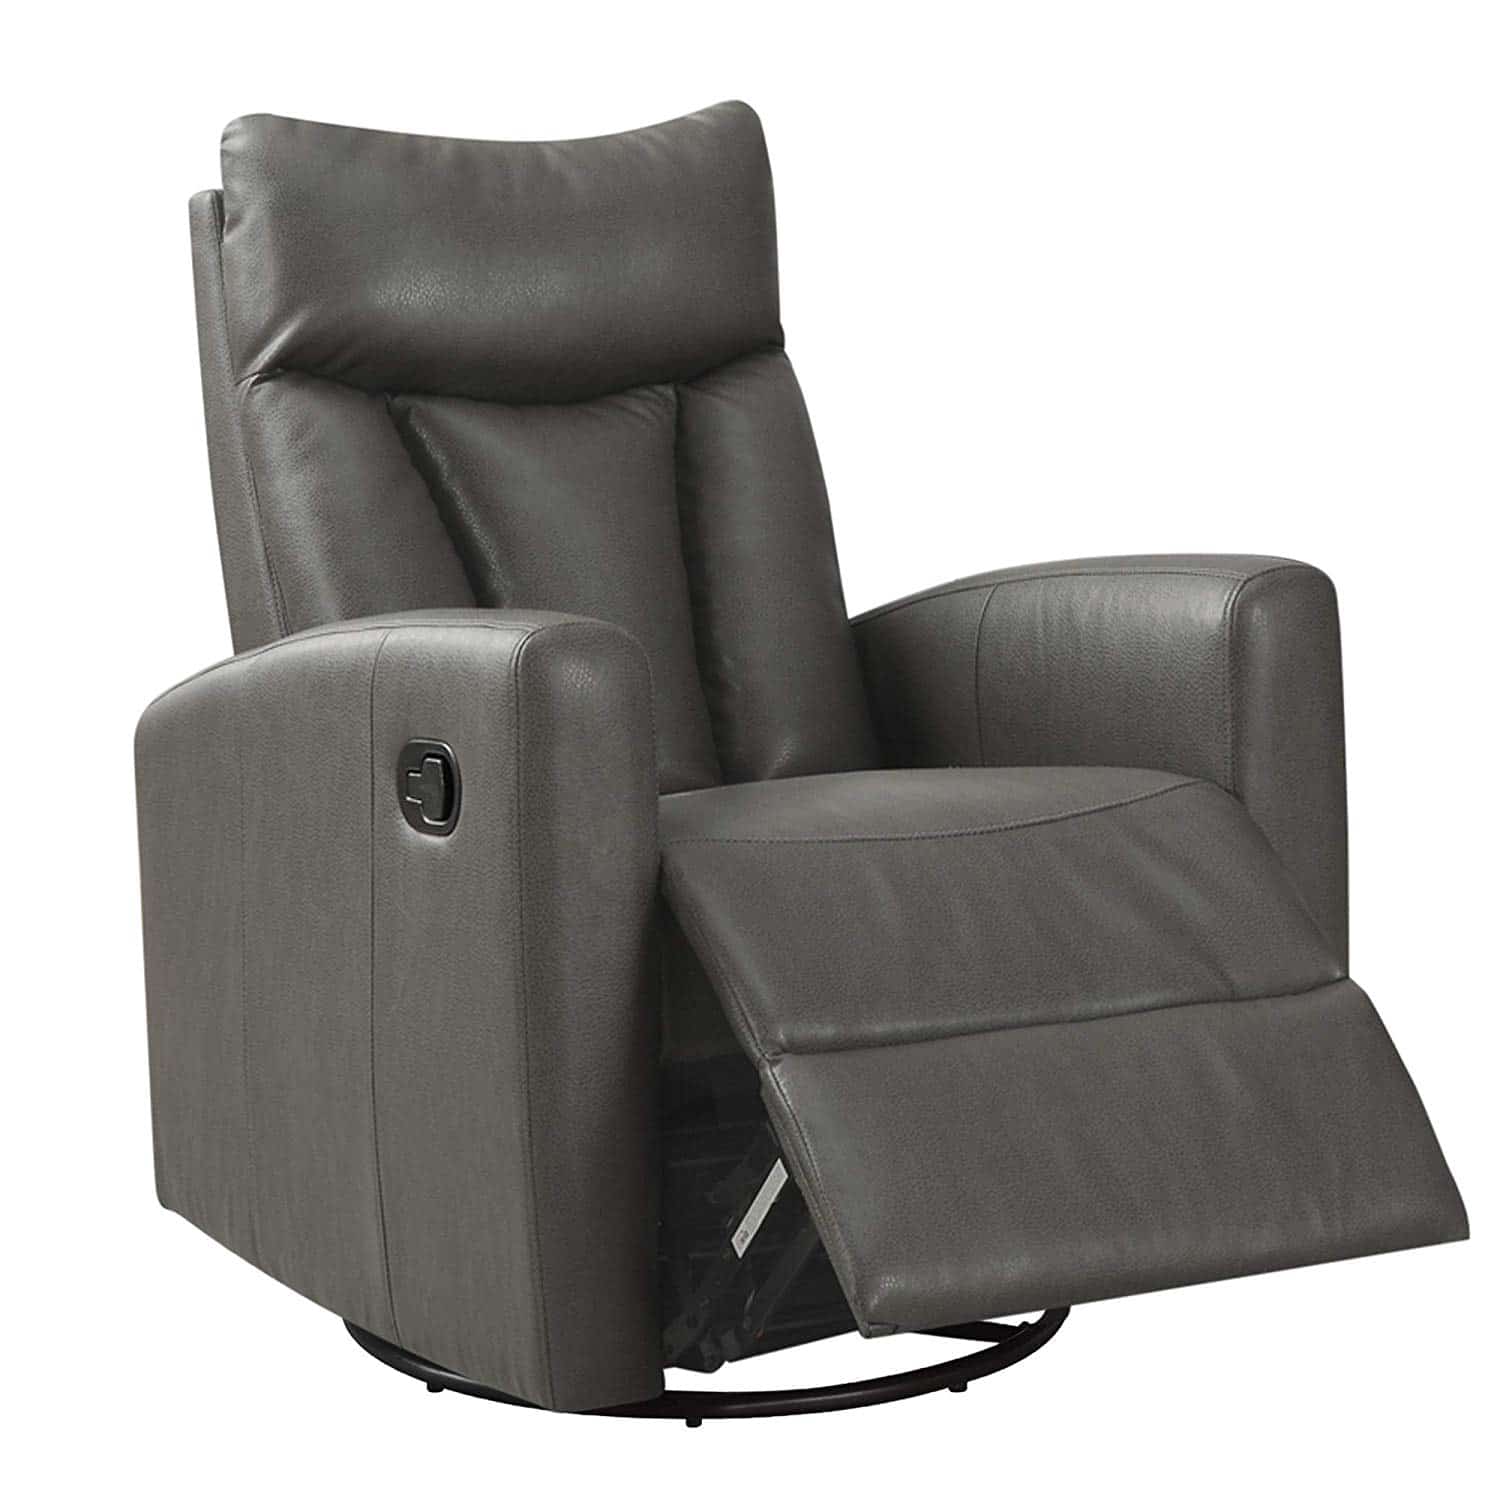 Monarch Specialties Recliner Chair